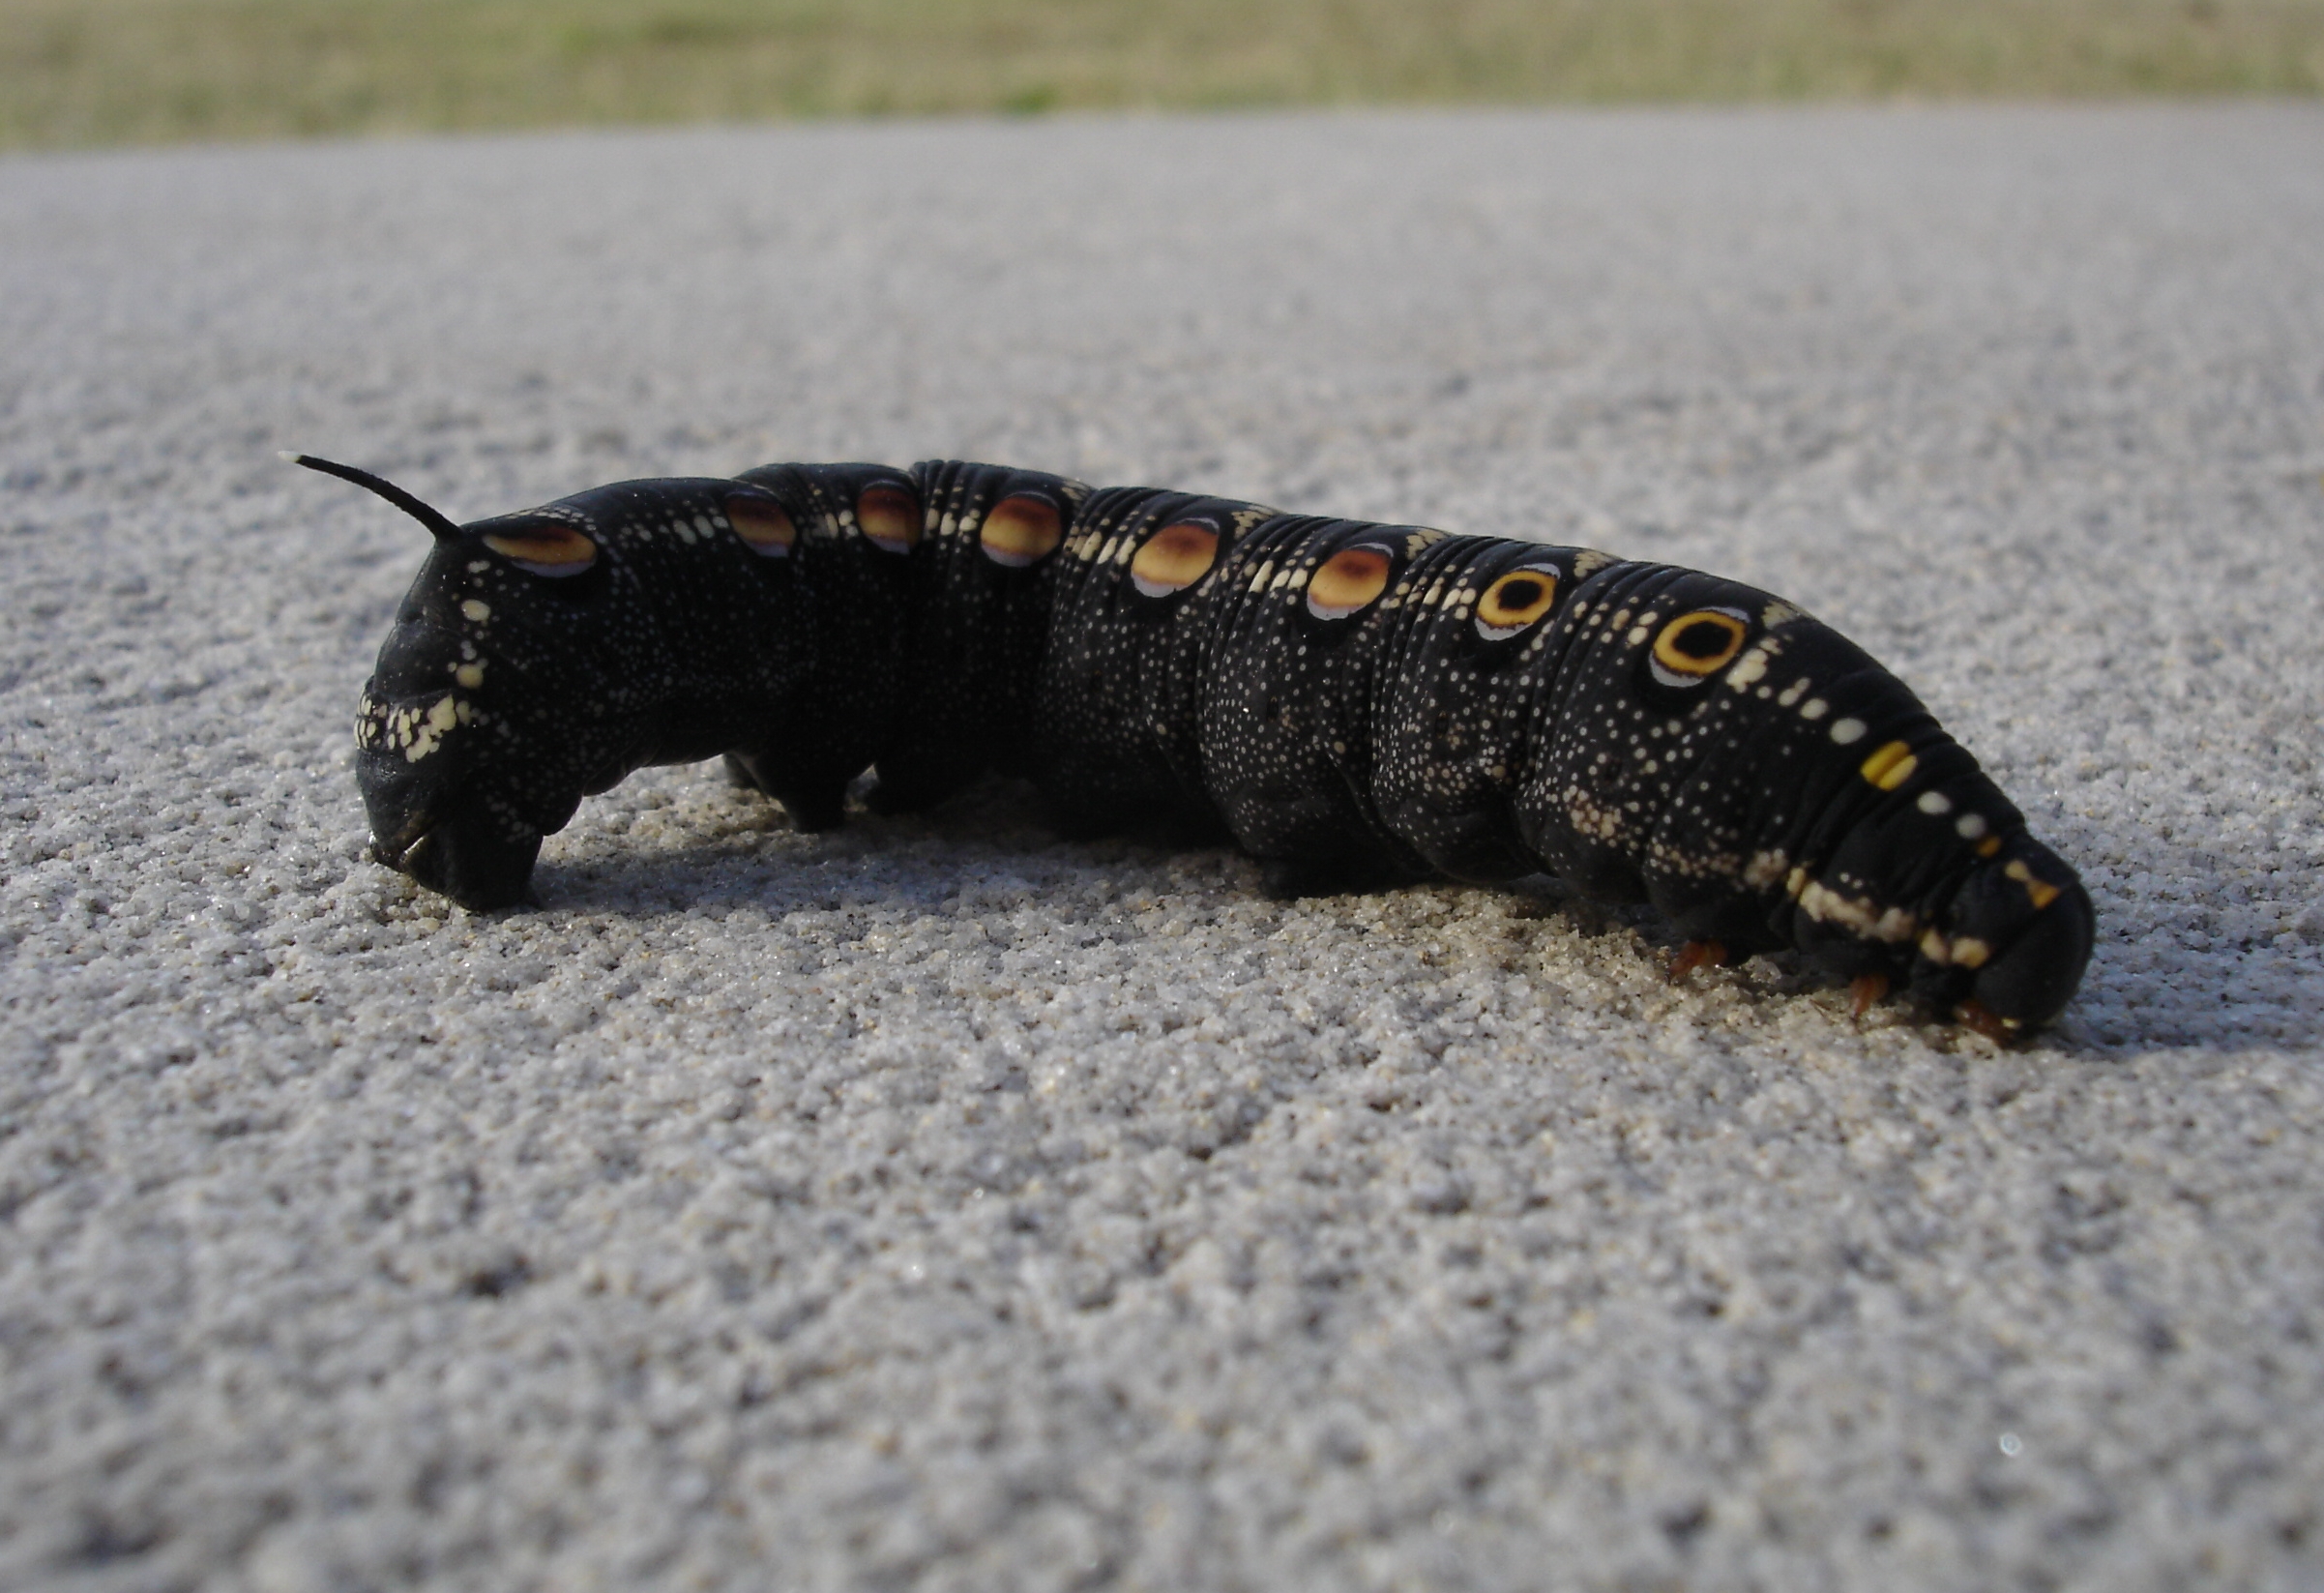 File:Black caterpillar.jpg - Wikimedia Commons